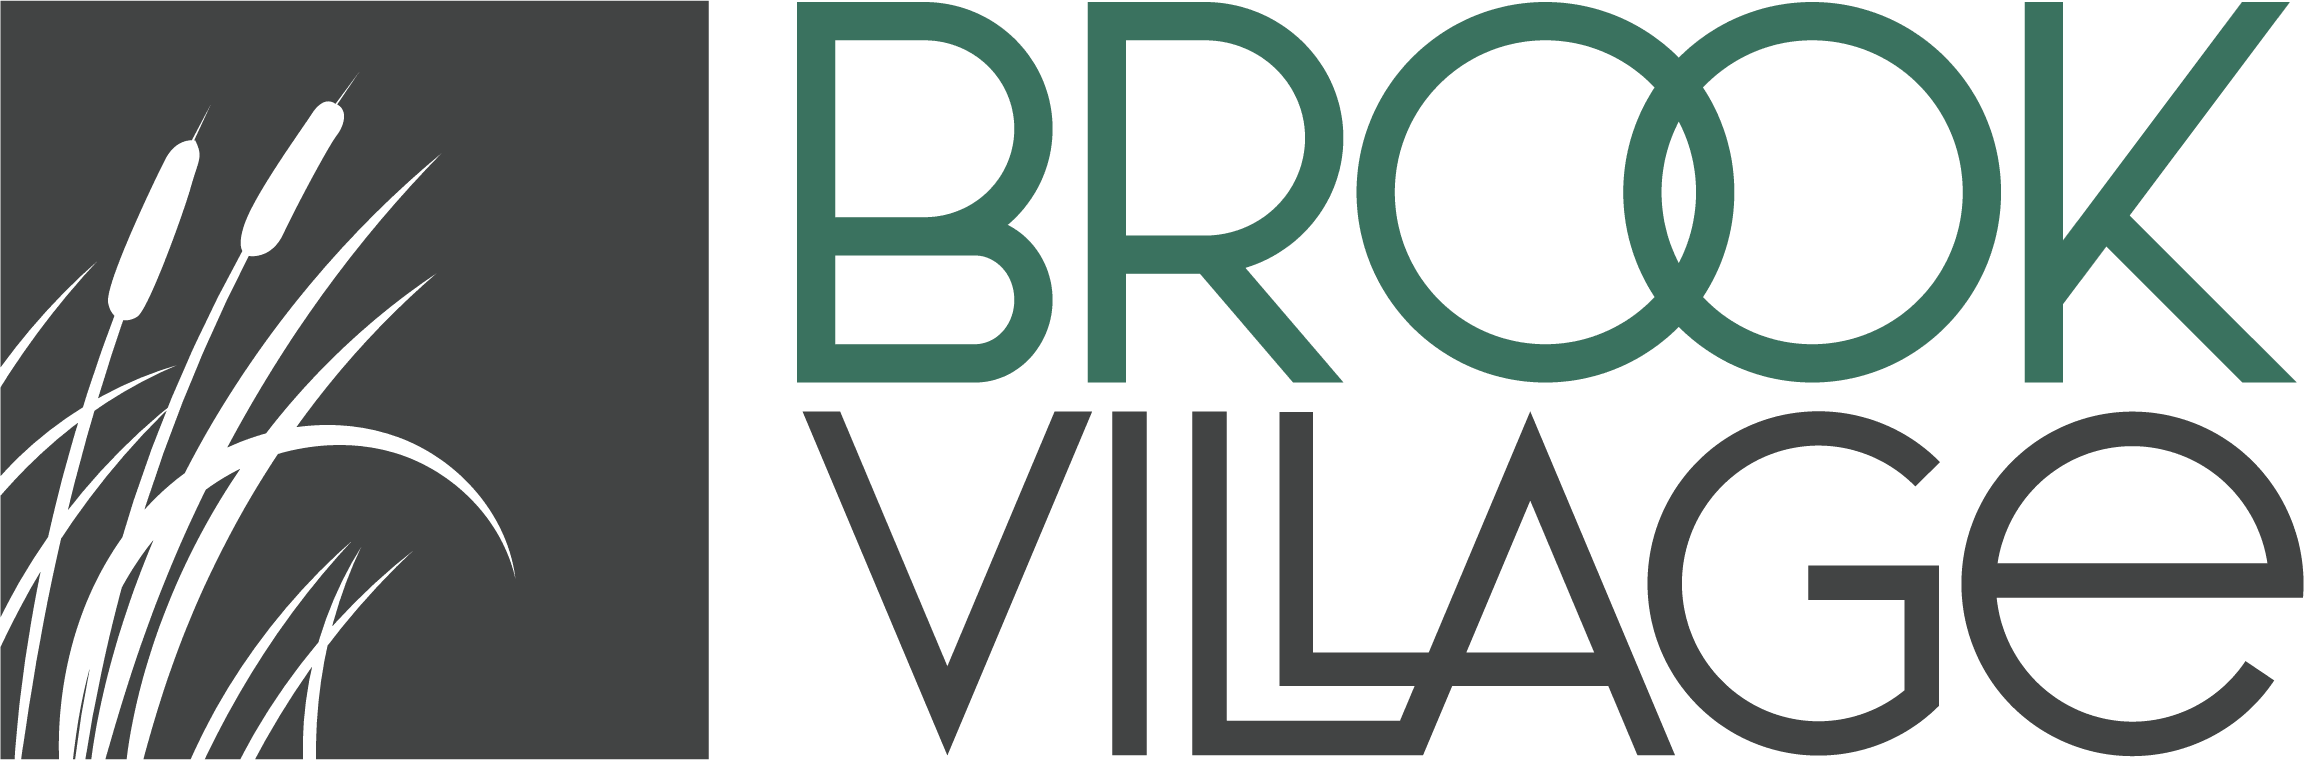 Brook Village logo